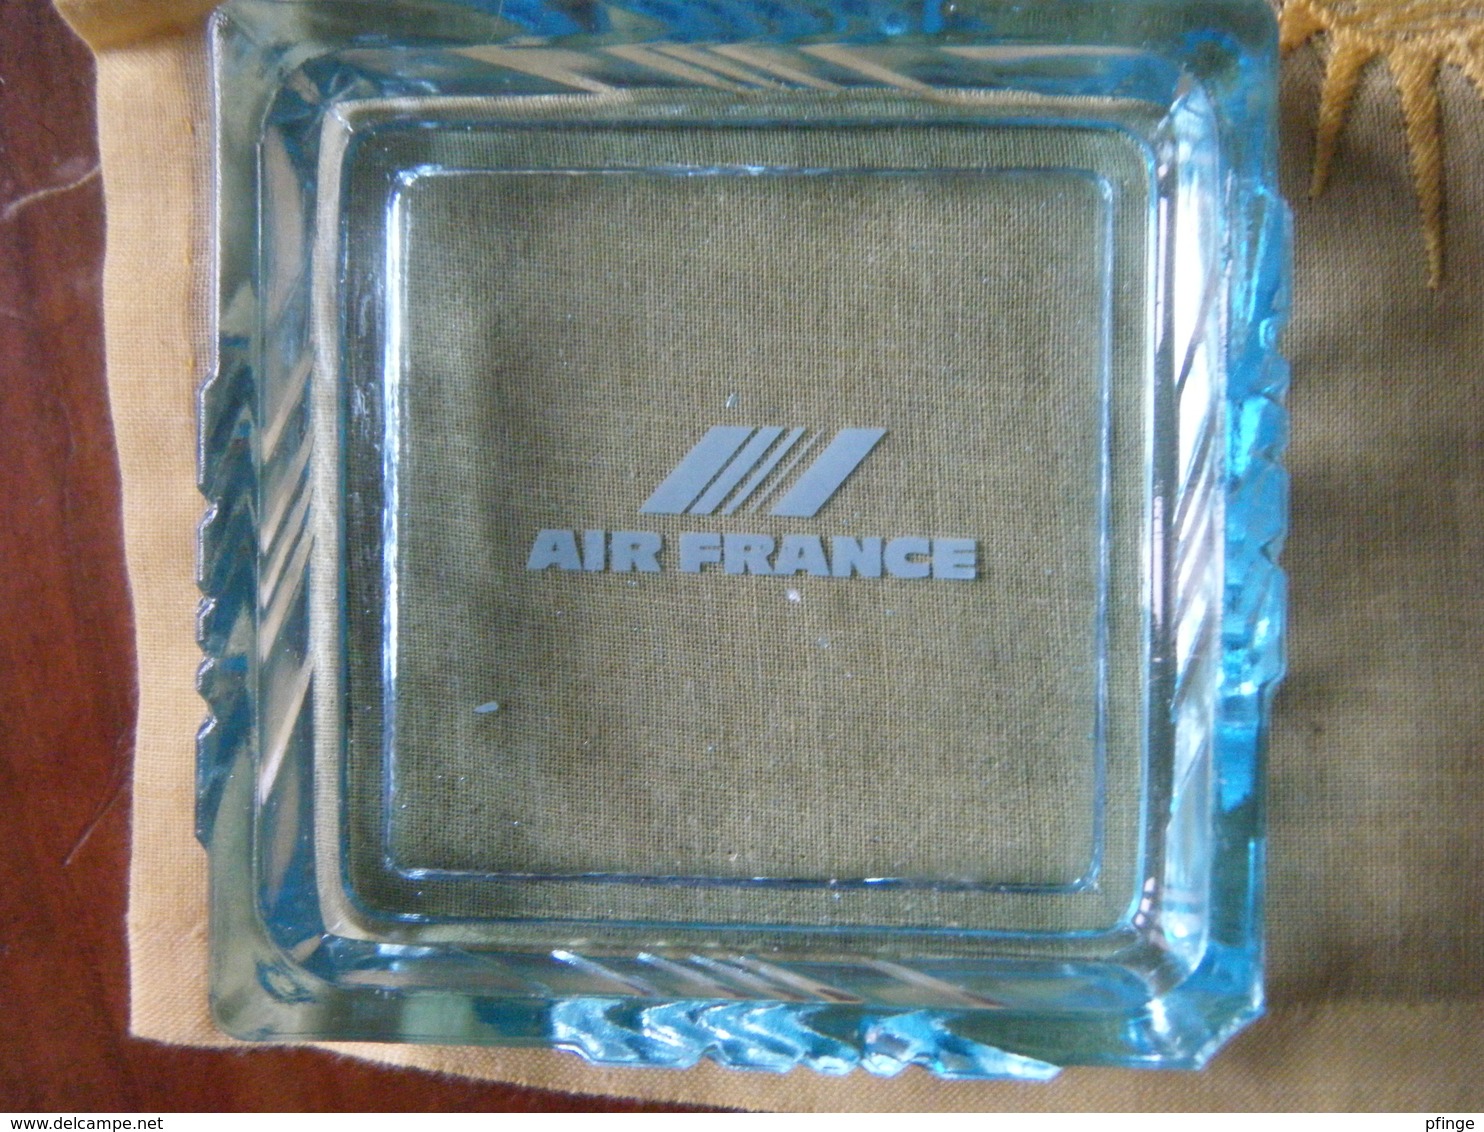 Cendrier Air France - Glas